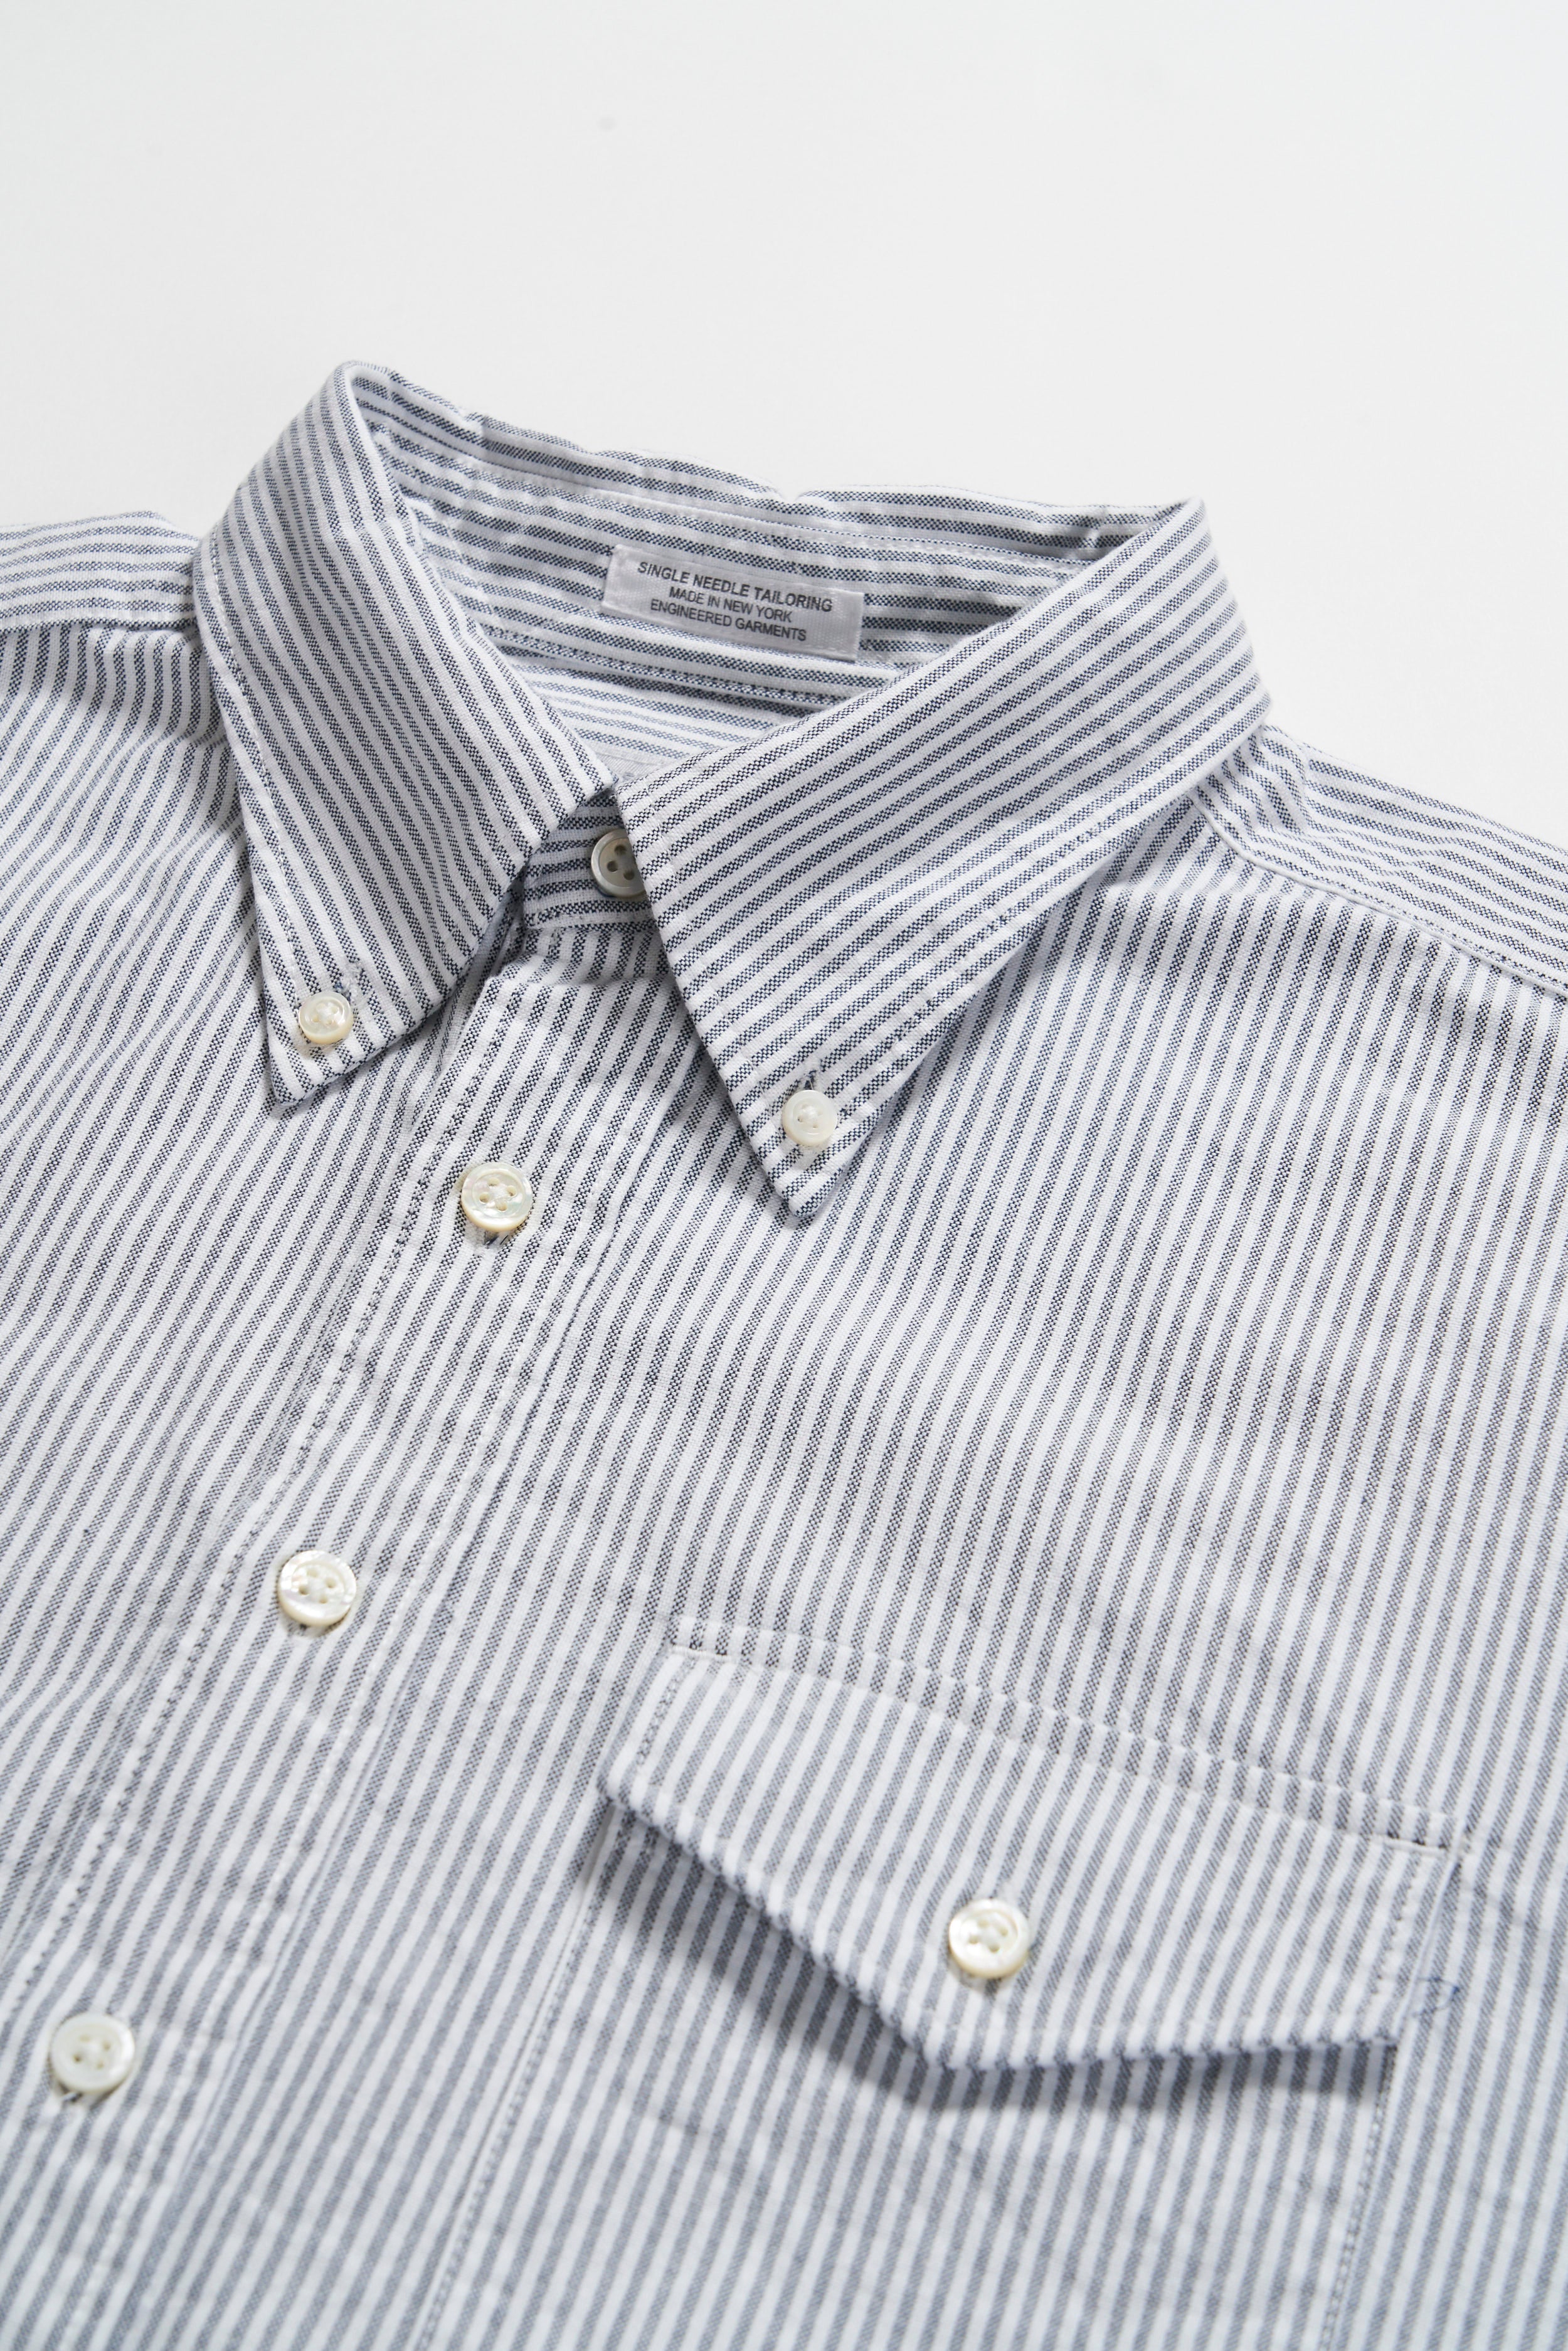 Engineered Garments Ivy BD Shirt - Grey Candy Stripe Oxford L